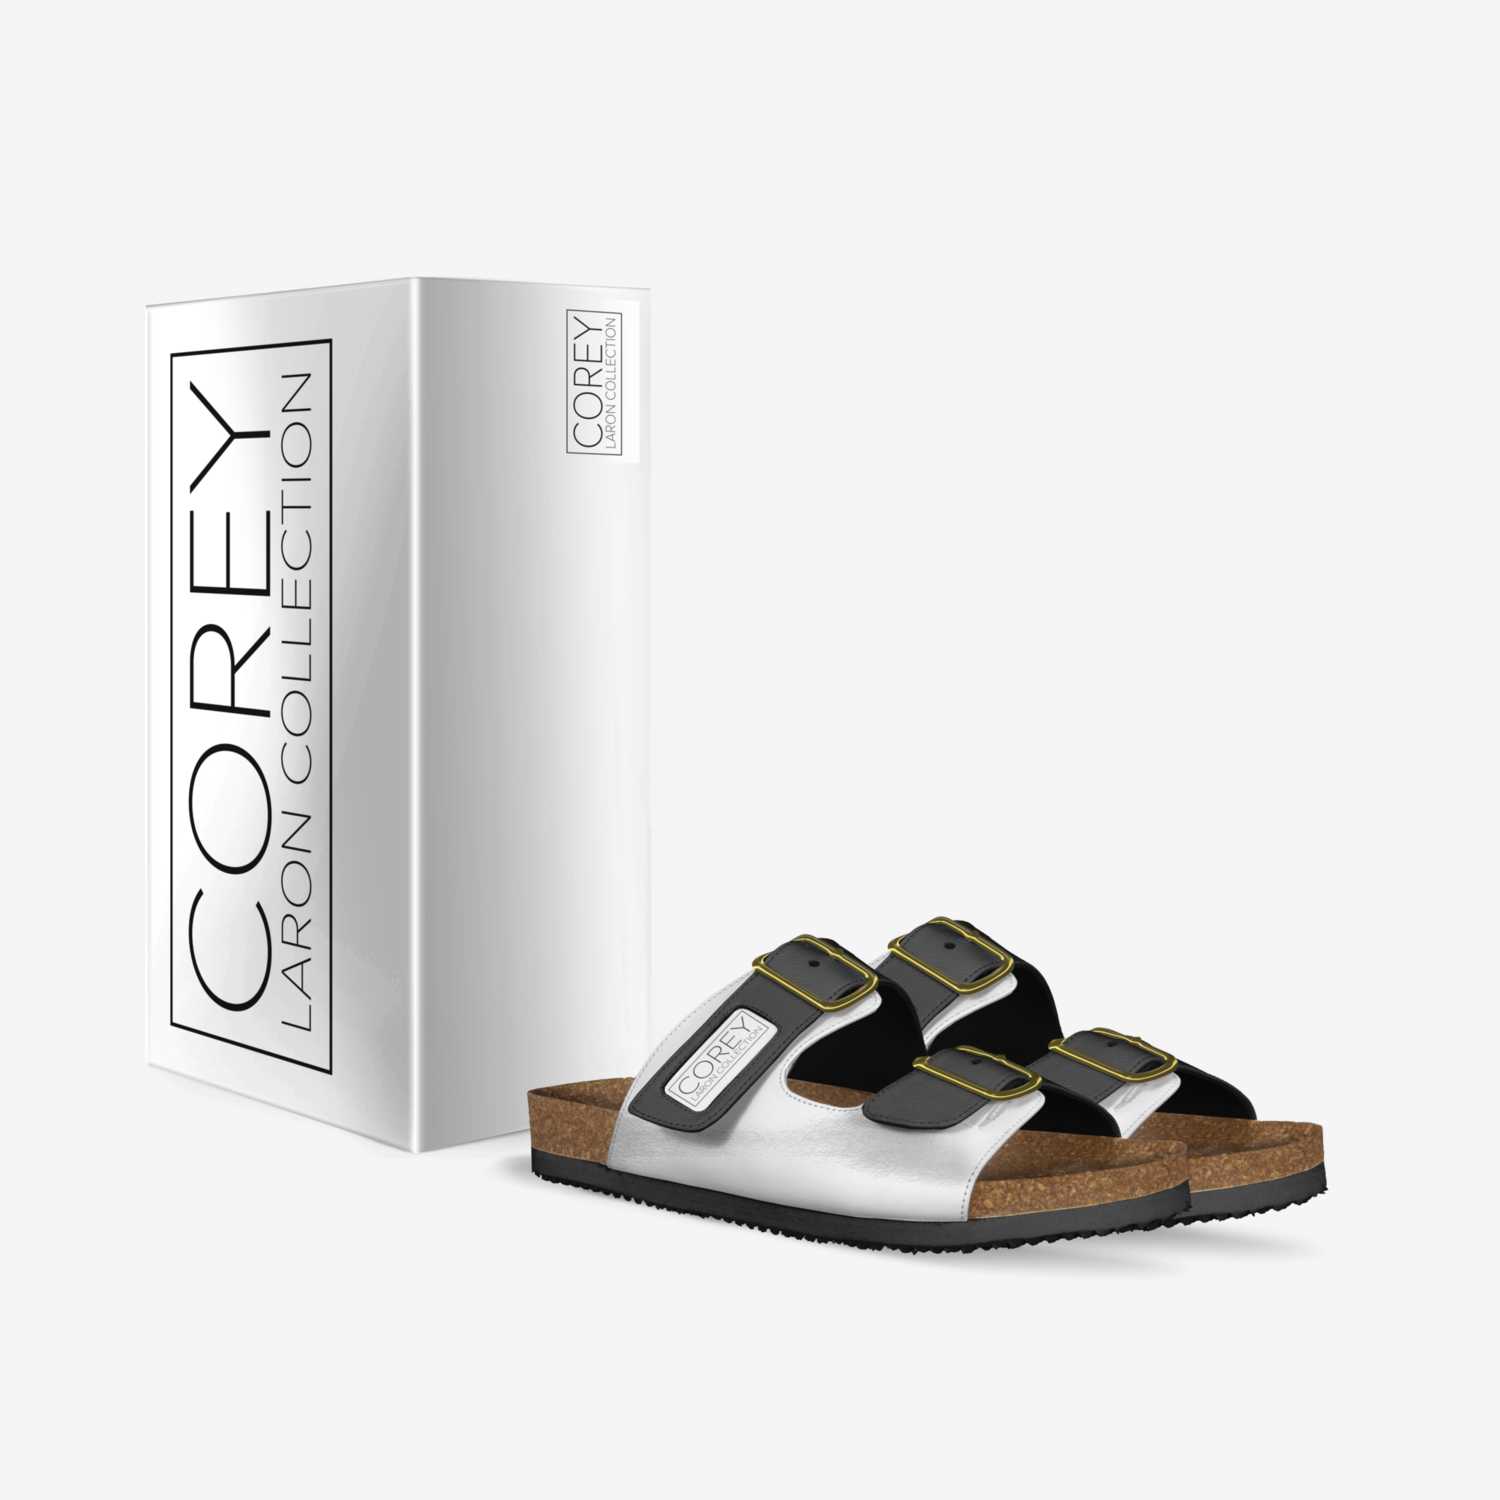 Corey Laron 7 custom made in Italy shoes by Corey Laron Hoskins Jr | Box view